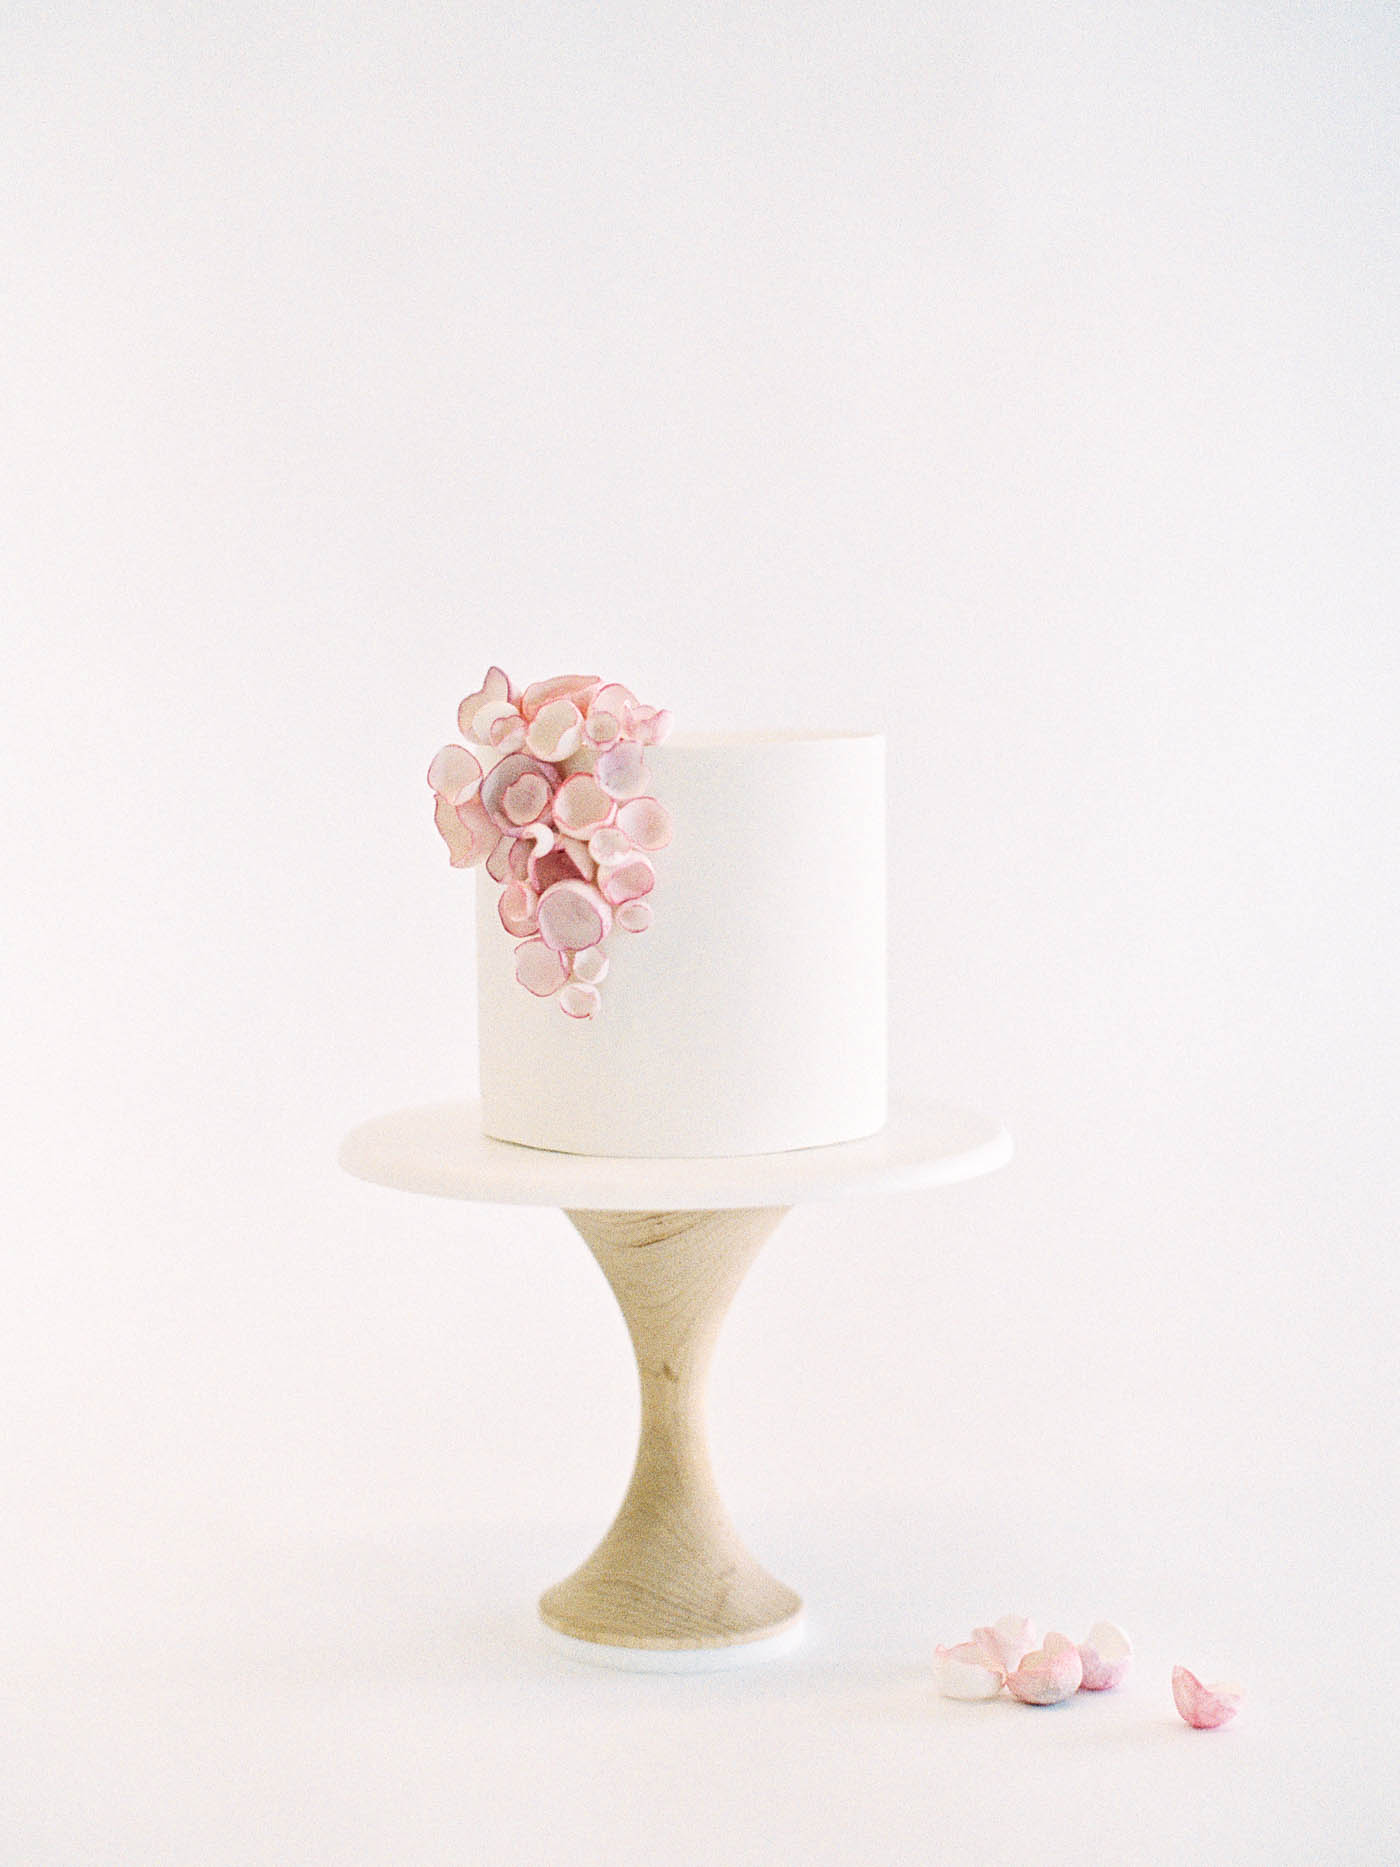 Delicate-Wedding-Cakes-1-Jen_Huang-002344-R1-011.jpg